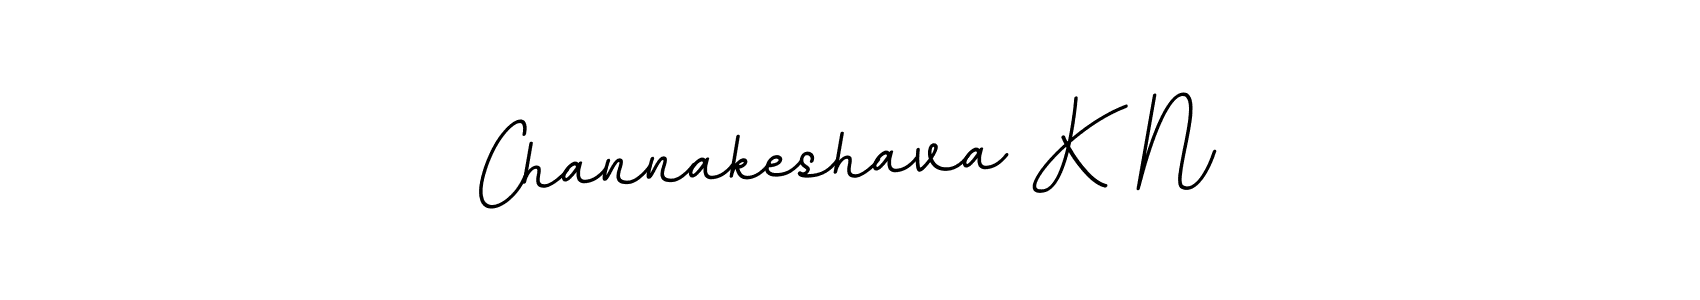 How to Draw Channakeshava K N signature style? BallpointsItalic-DORy9 is a latest design signature styles for name Channakeshava K N. Channakeshava K N signature style 11 images and pictures png